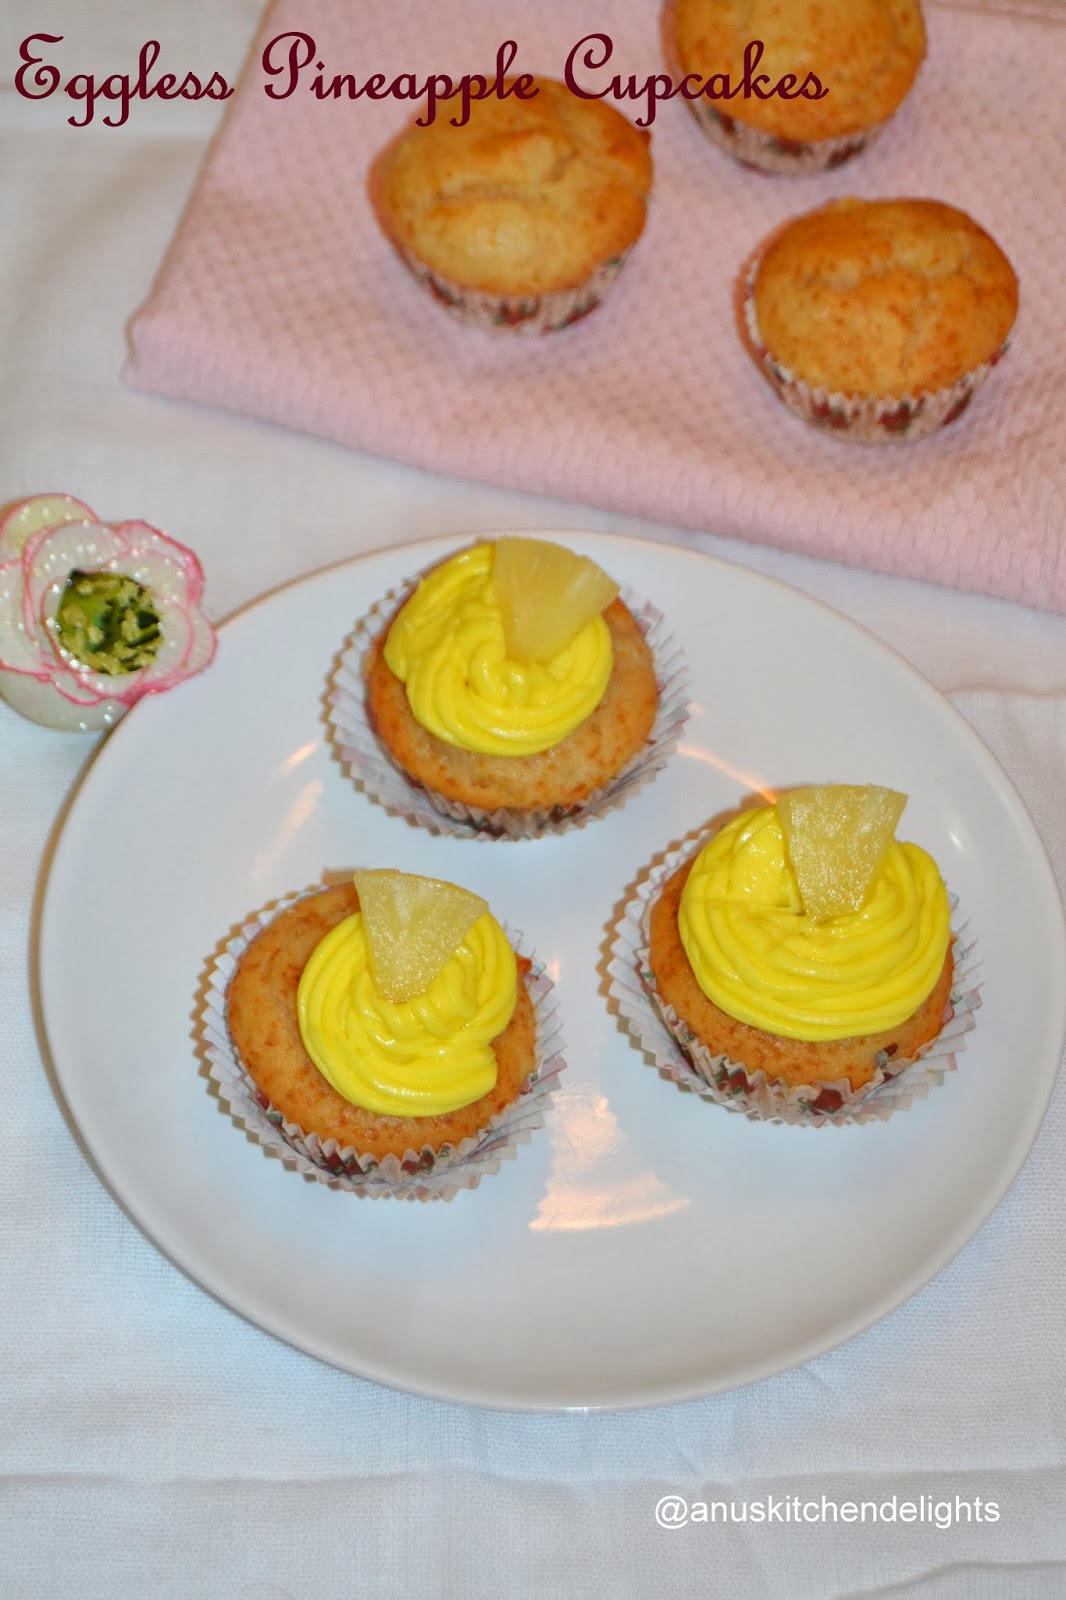 Egg-less Pineapple Cupcakes